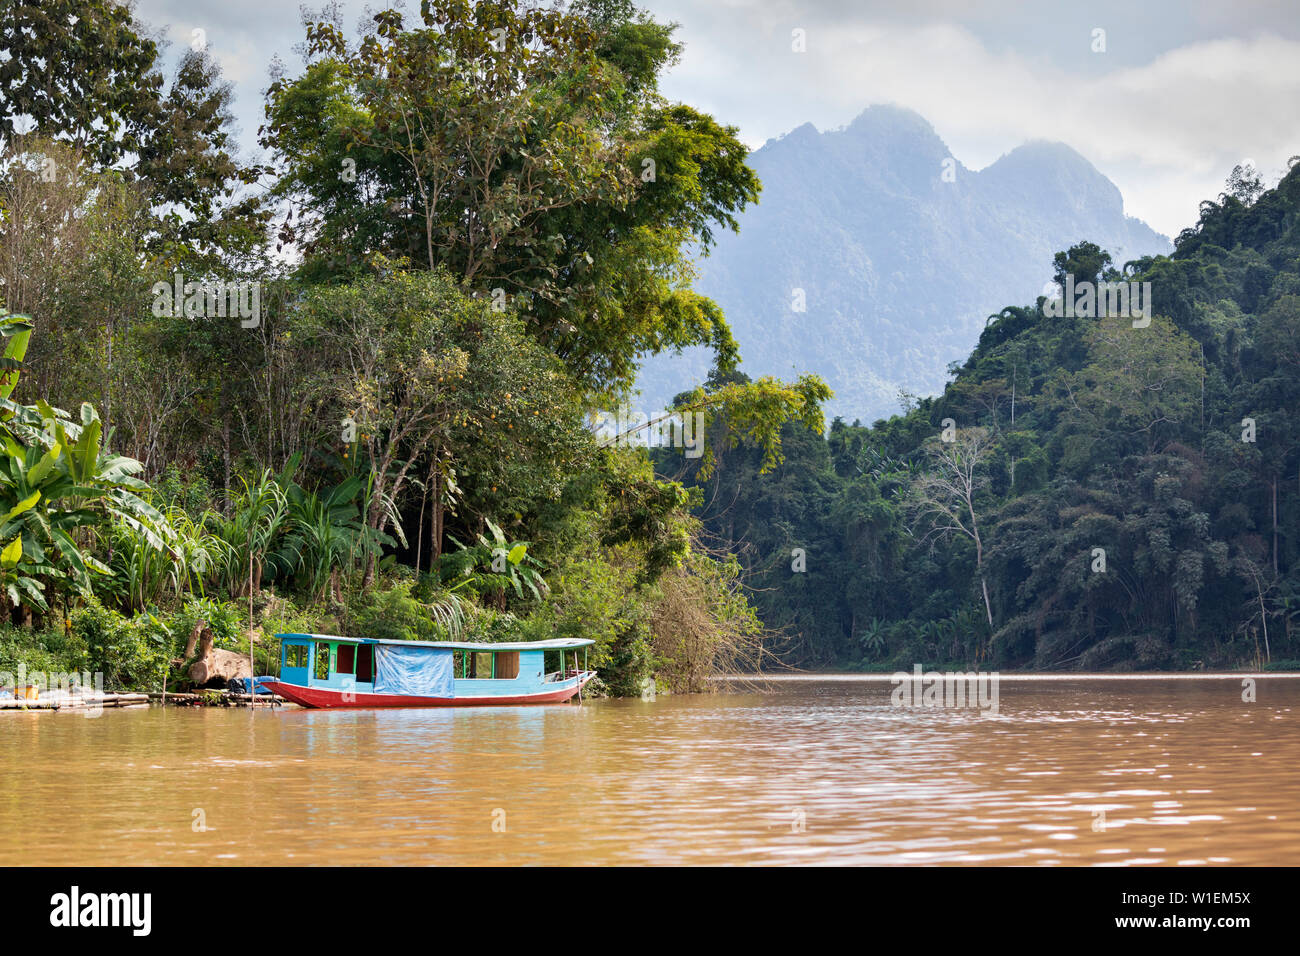 Nam Ou Fluss im Dorf geschehen Khoun, in der Nähe von Nong Khiaw, Provinz Luang Prabang Laos, Laos, Indochina, Südostasien, Asien Stockfoto